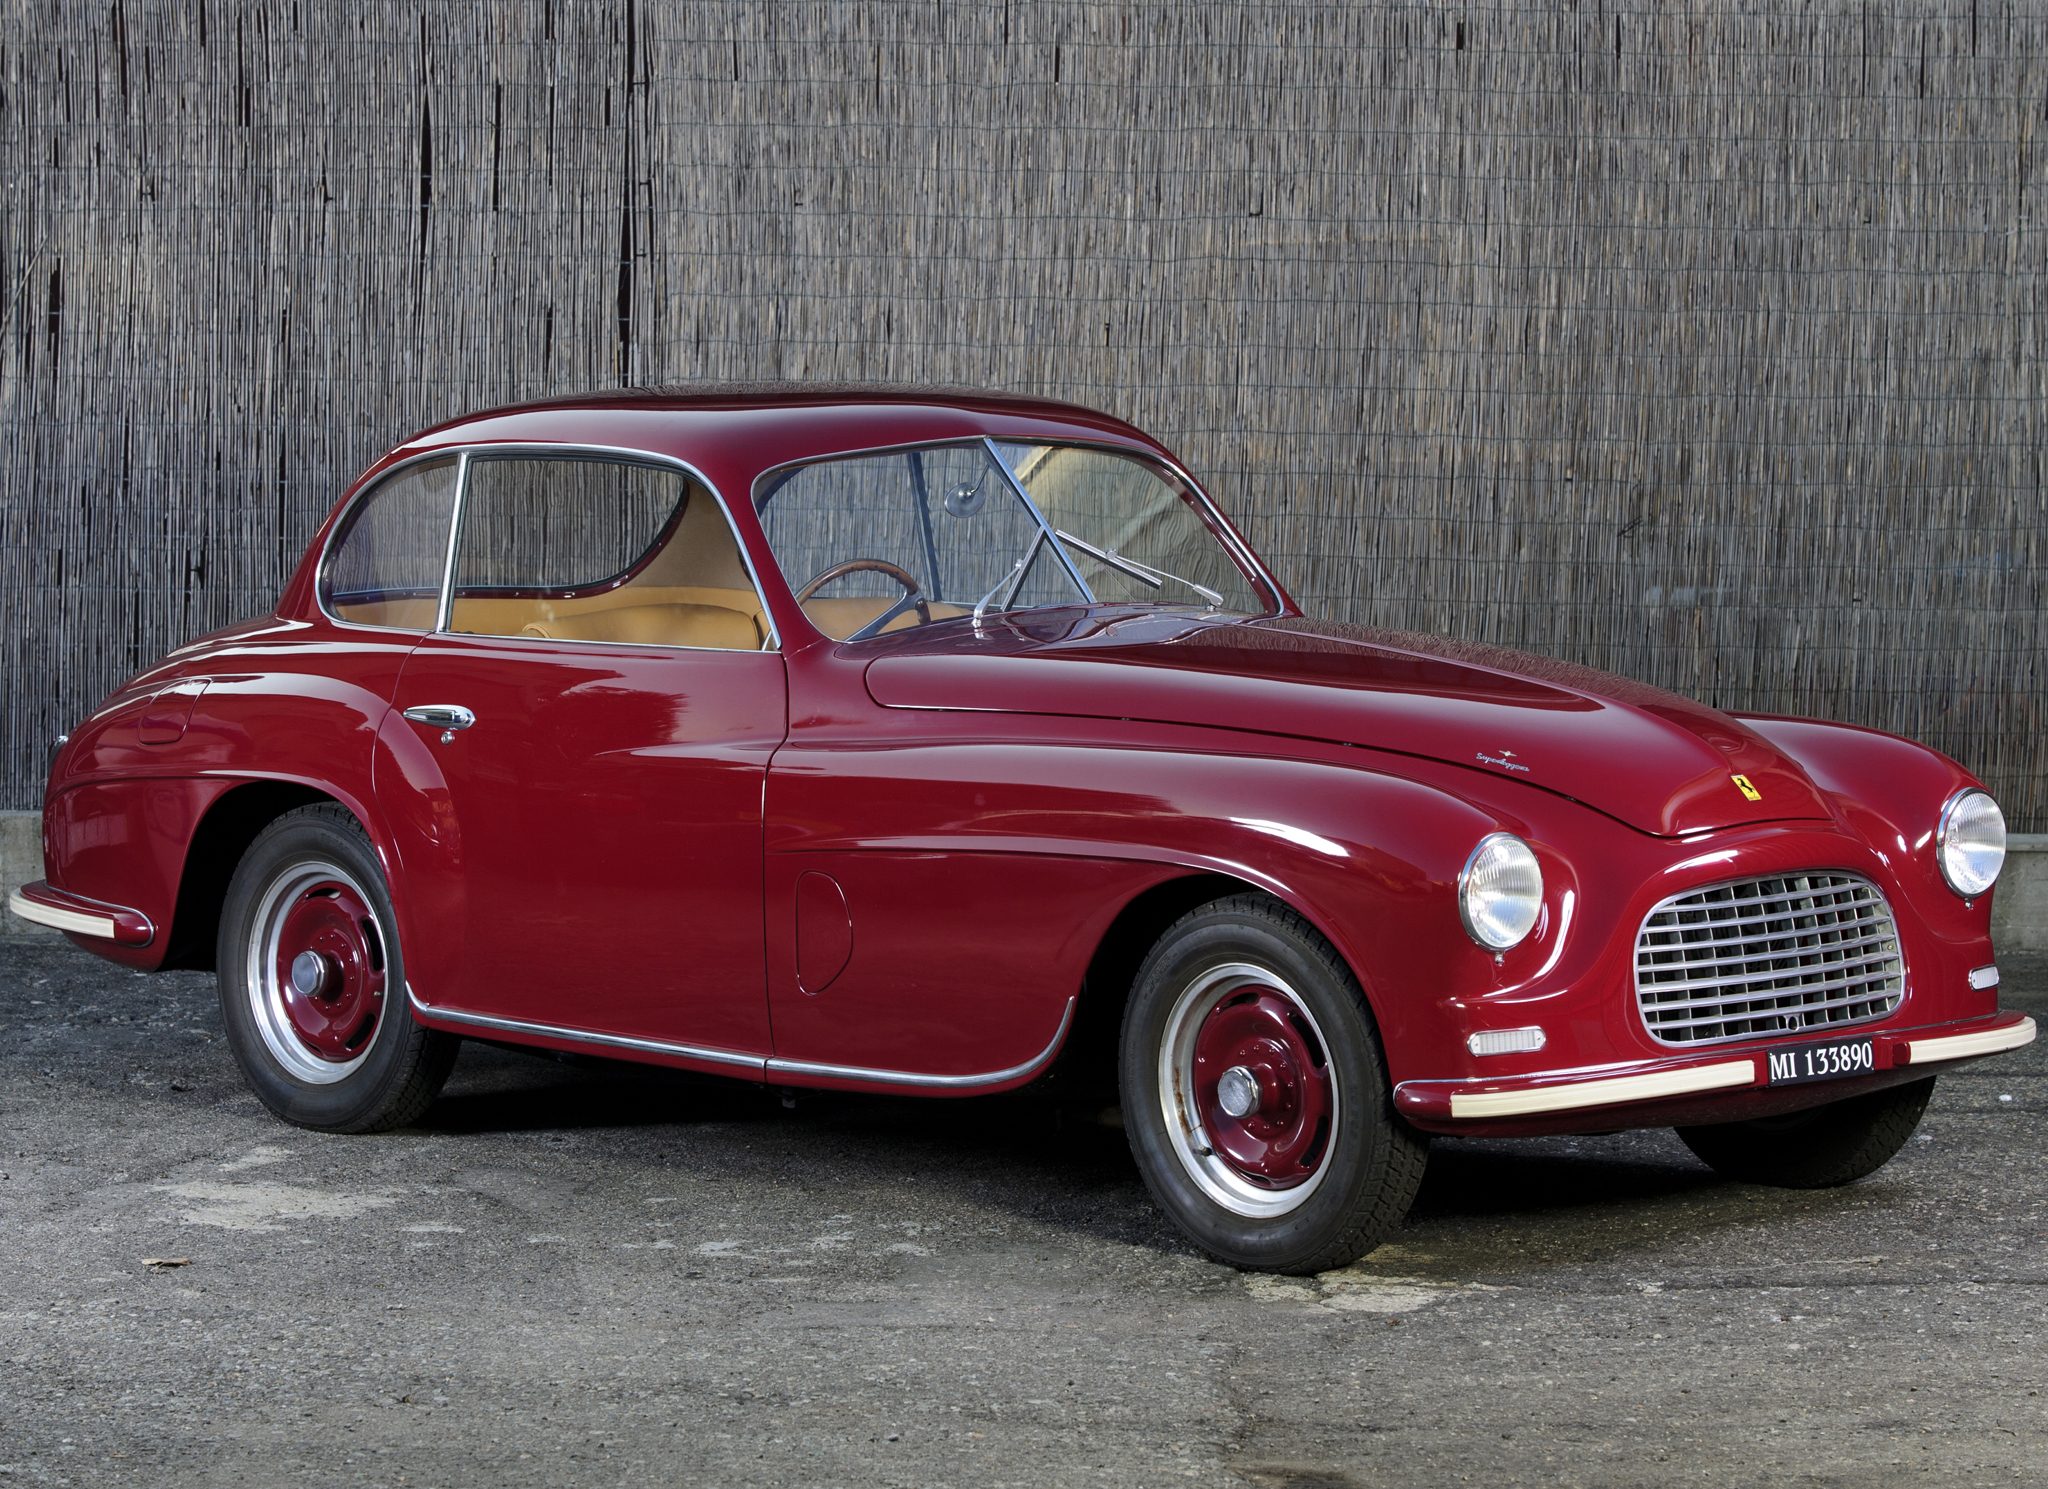 Car Of The Day: 1948 Ferrari 166 Inter